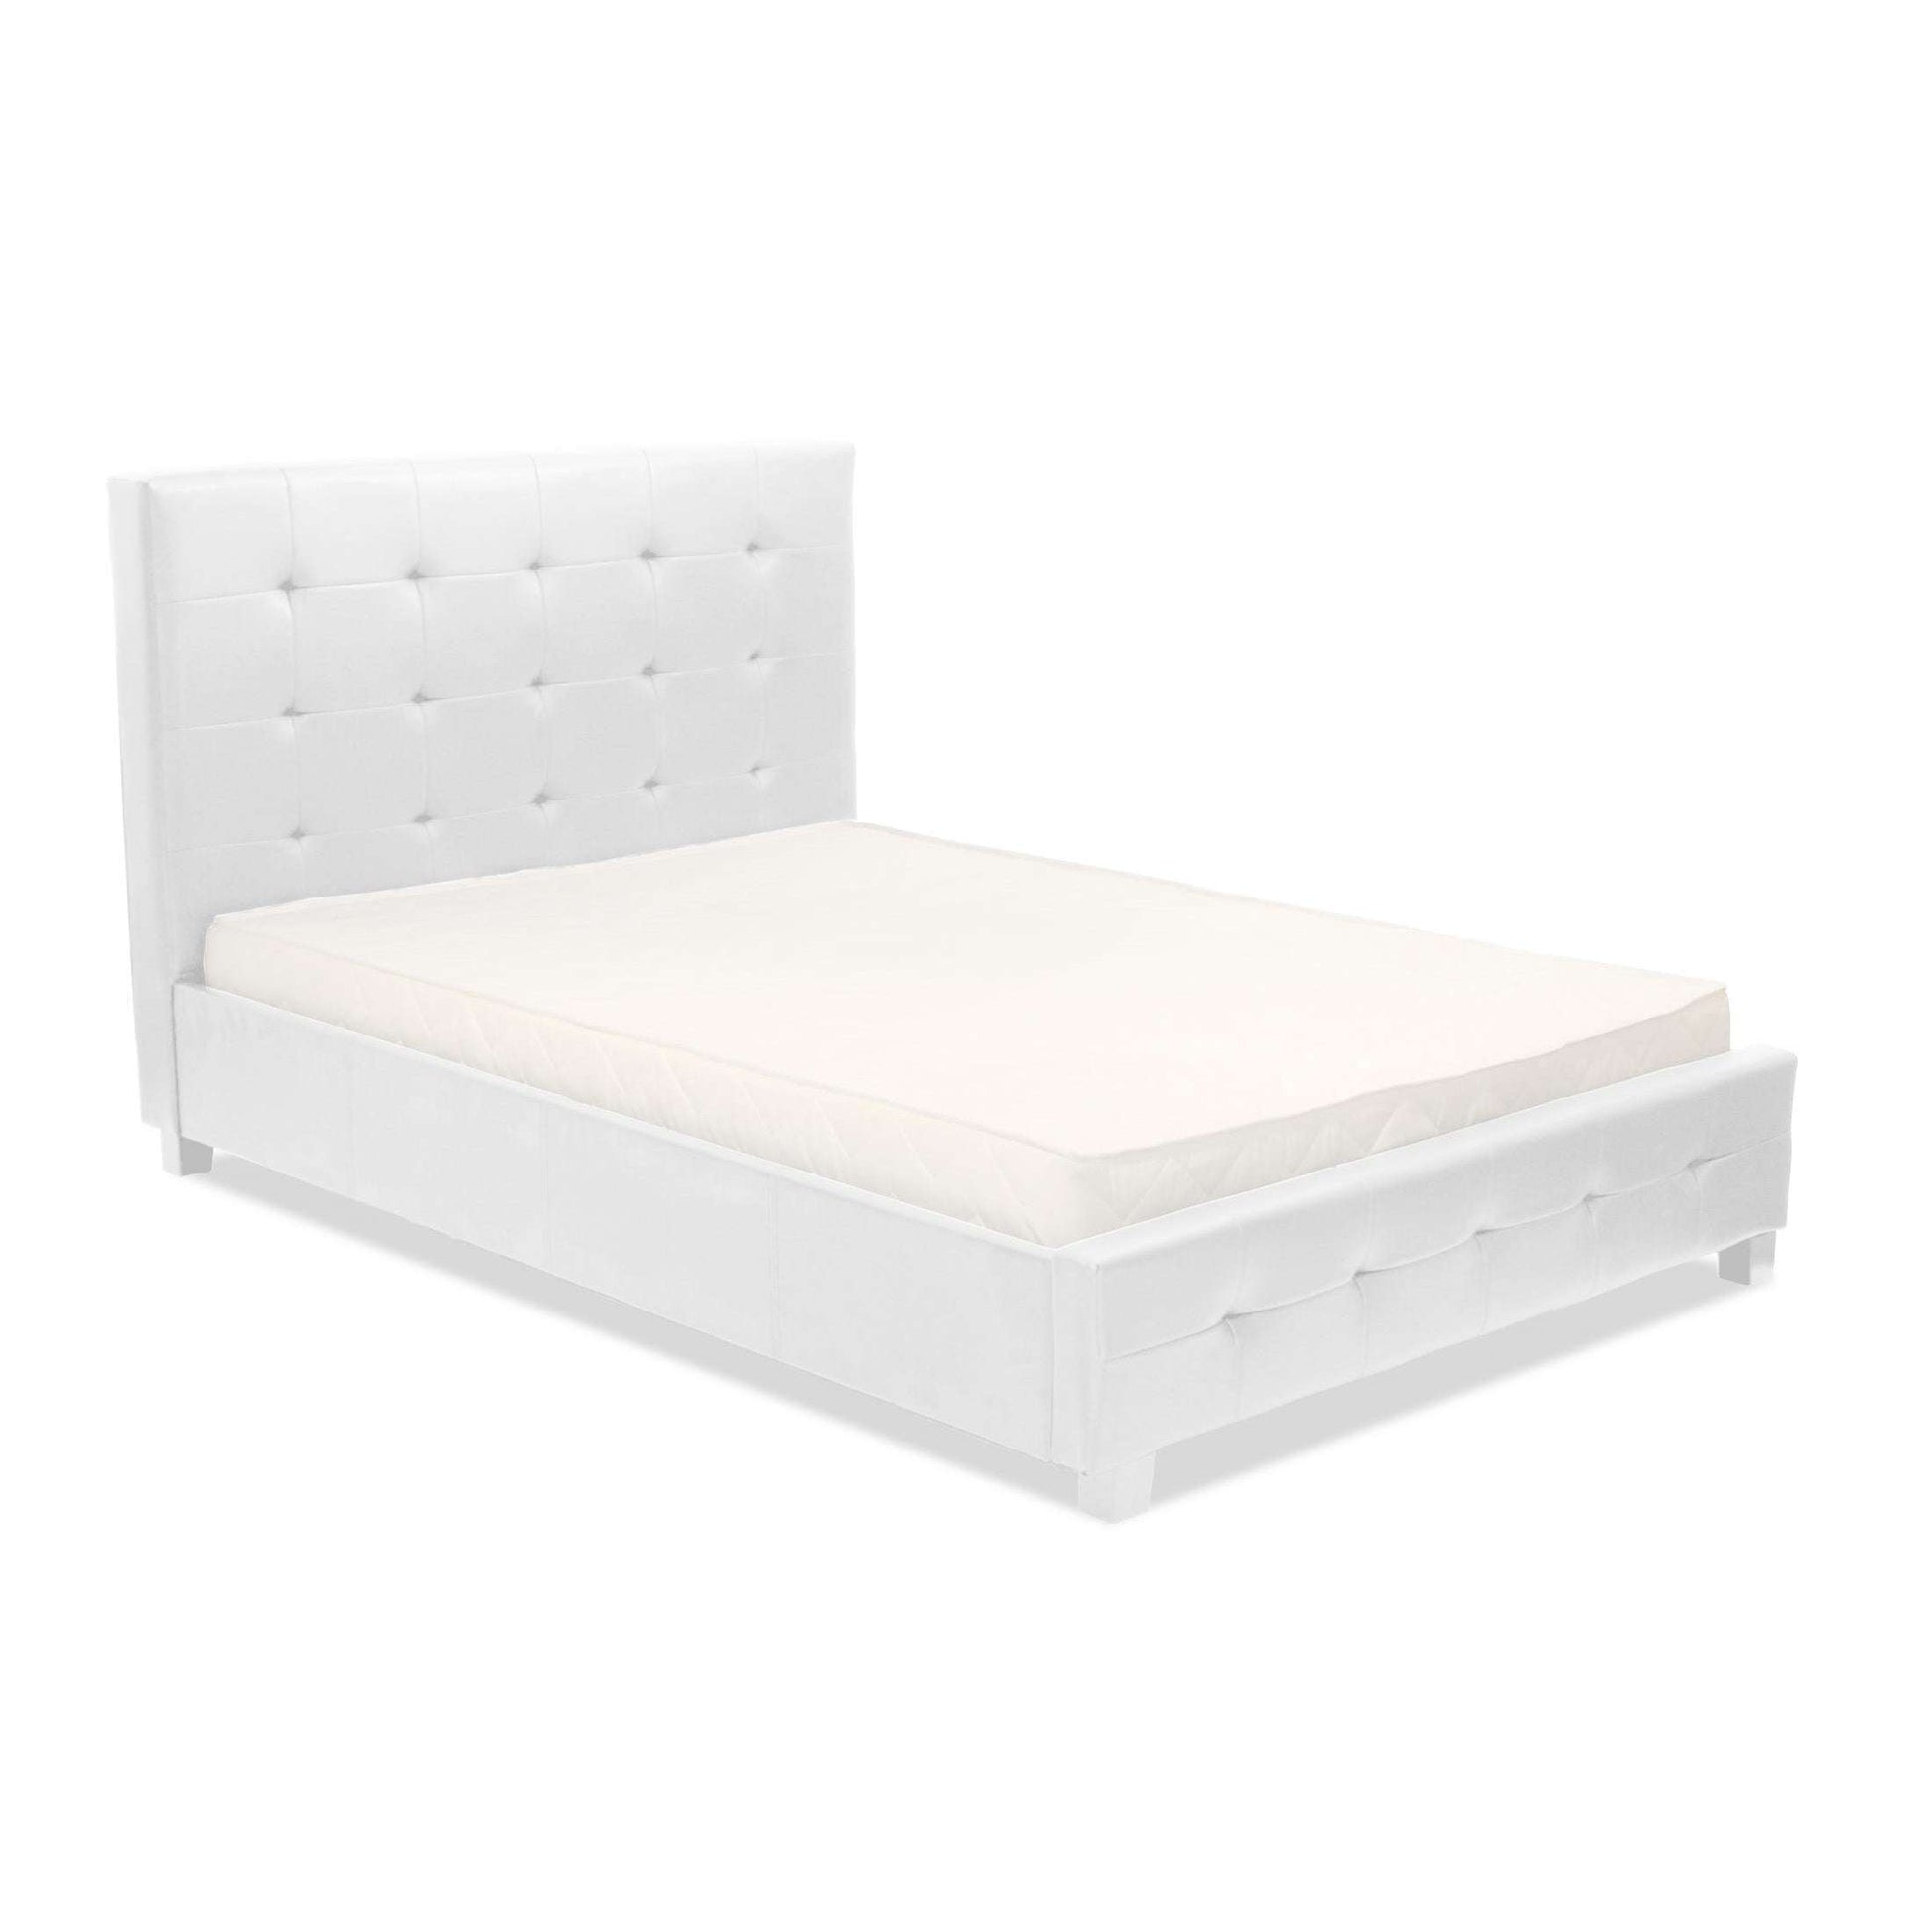 Ashpinoke:Lattice Polyurethane King Size Bed White,King Size Beds,Heartlands Furniture